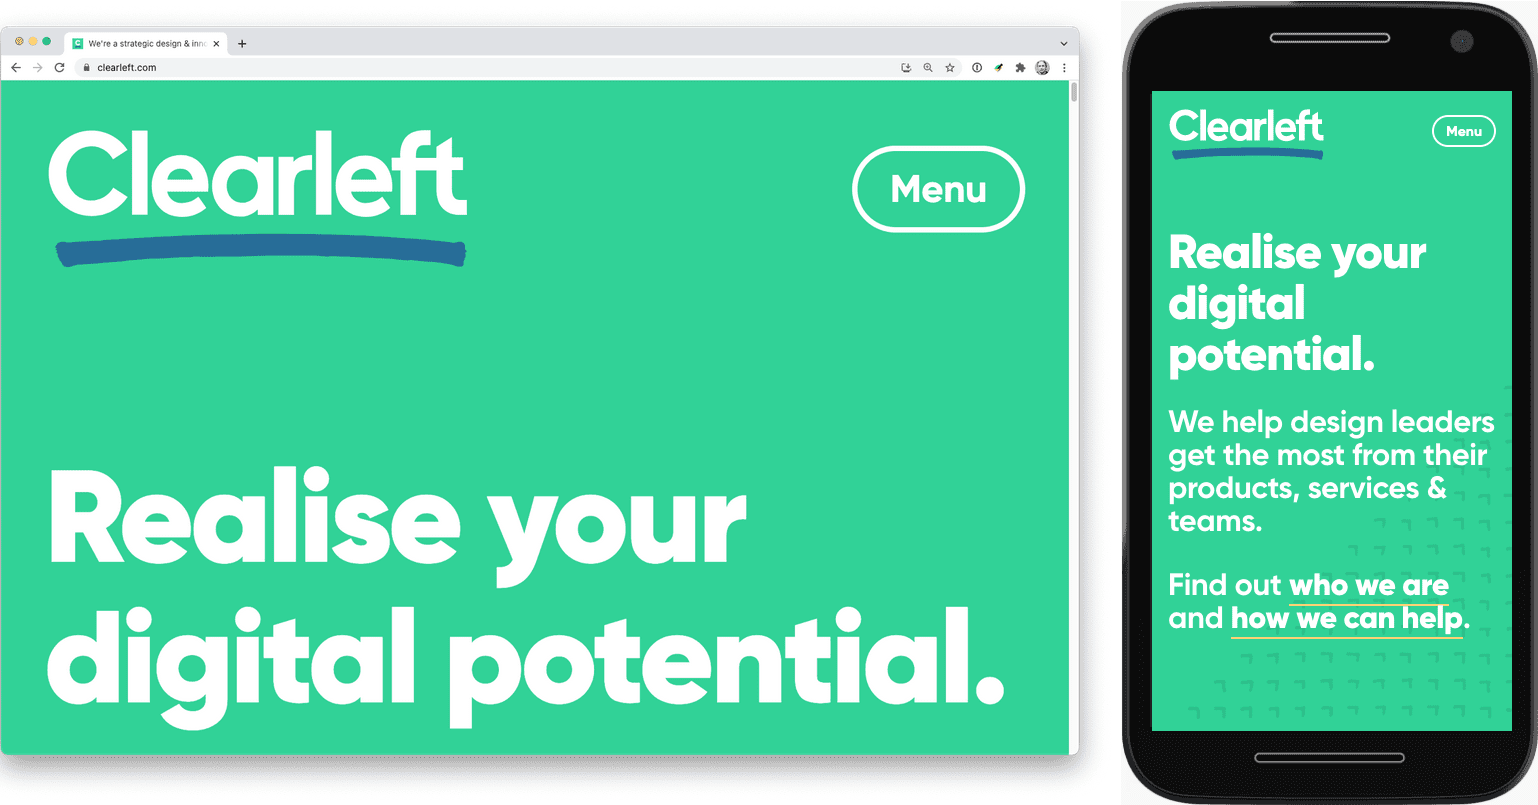 Clearleft.com